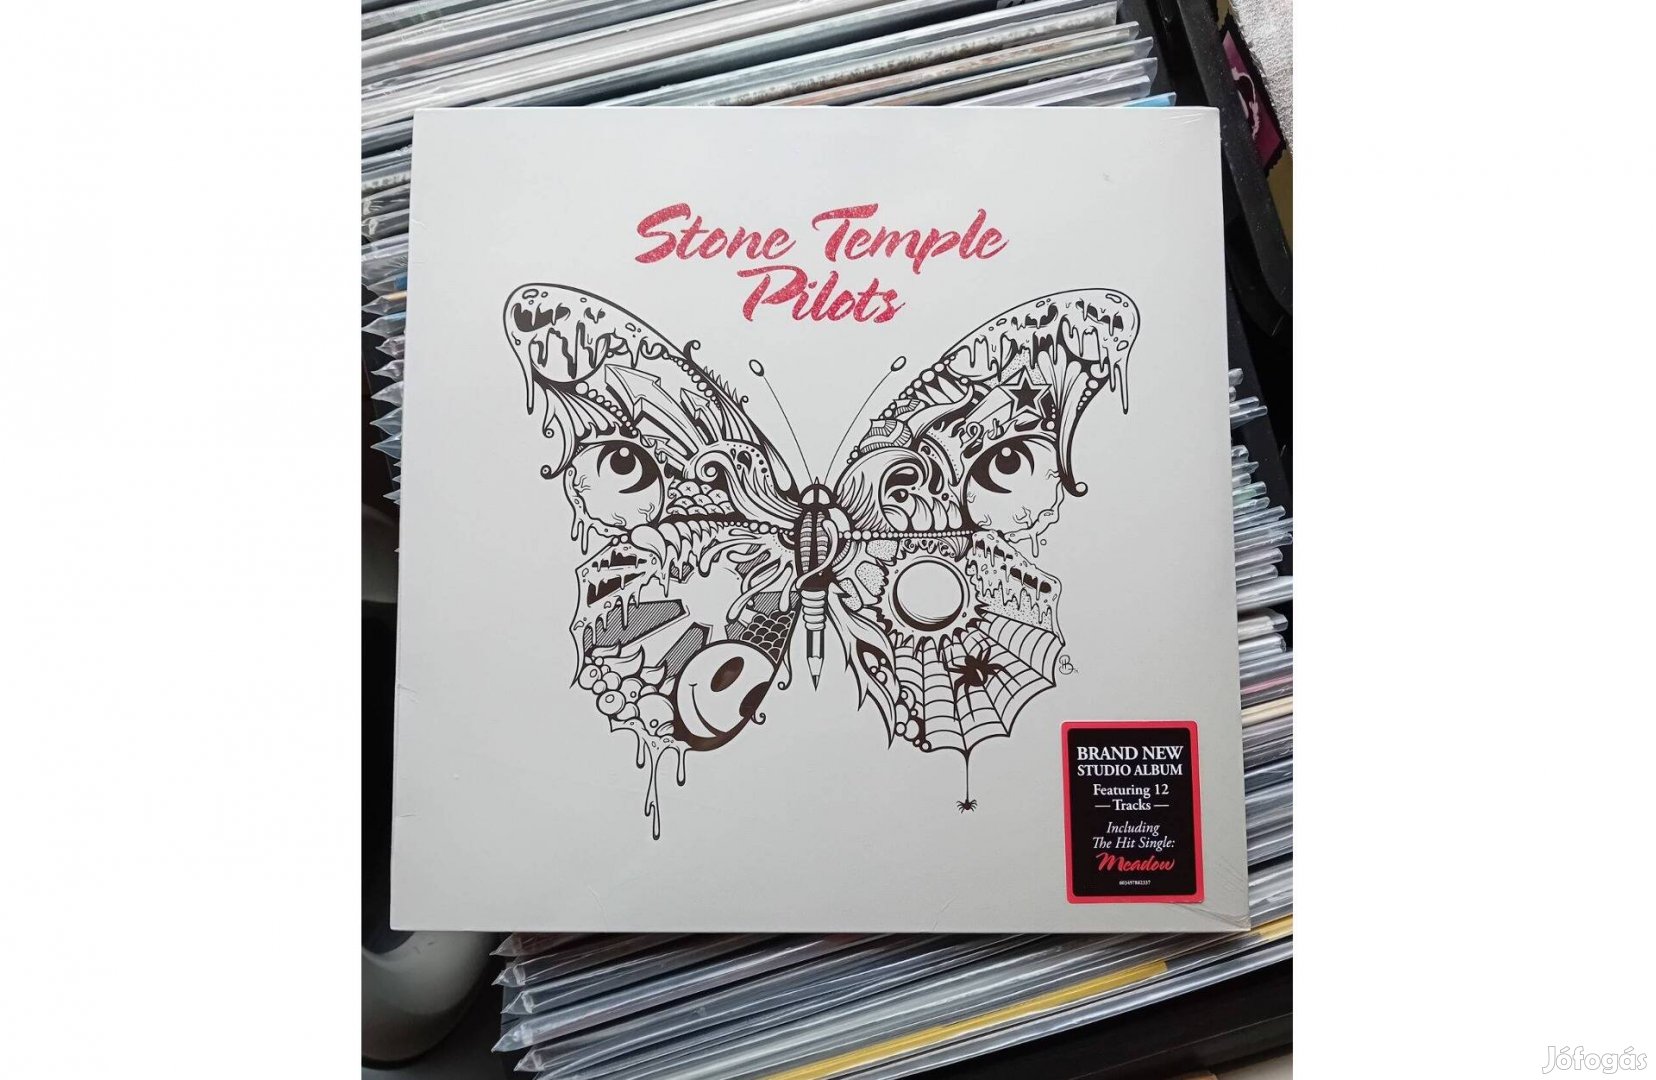 Stone Temple Pilots - Stone Temple Pilots Bakelit Lemez LP Bontatlan